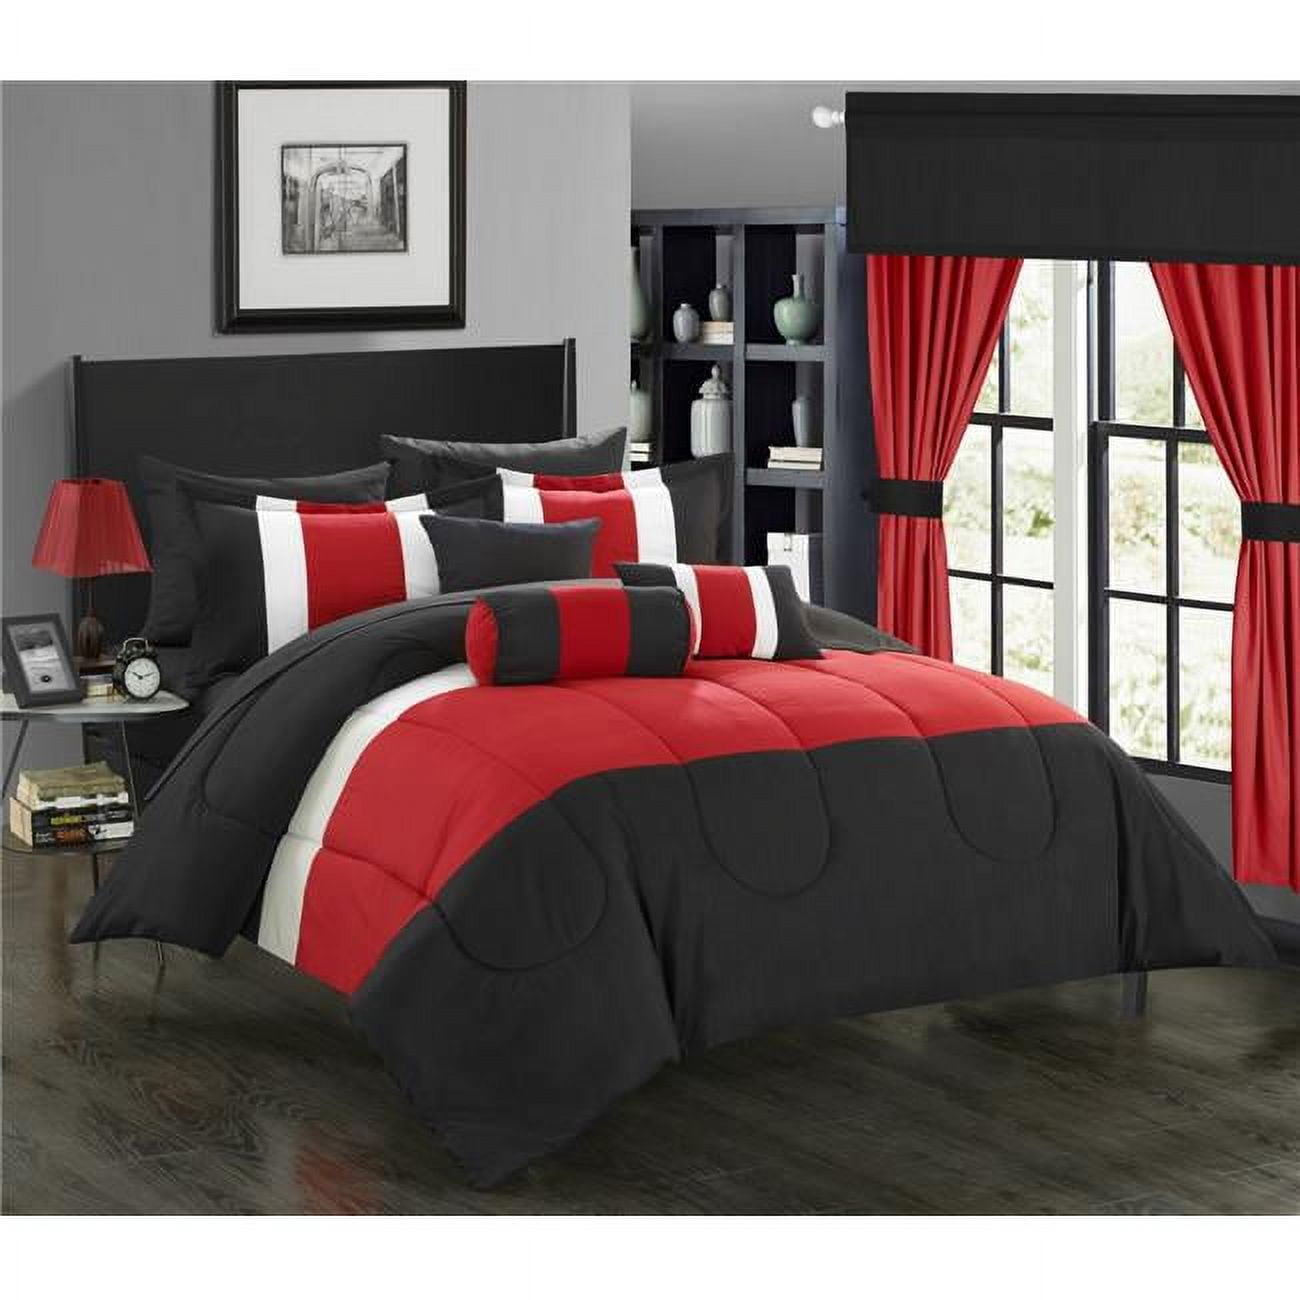 Cs1885-us 20 Piece Standon Complete Pieced Window Panel Collection Queen Comforter Set, Red